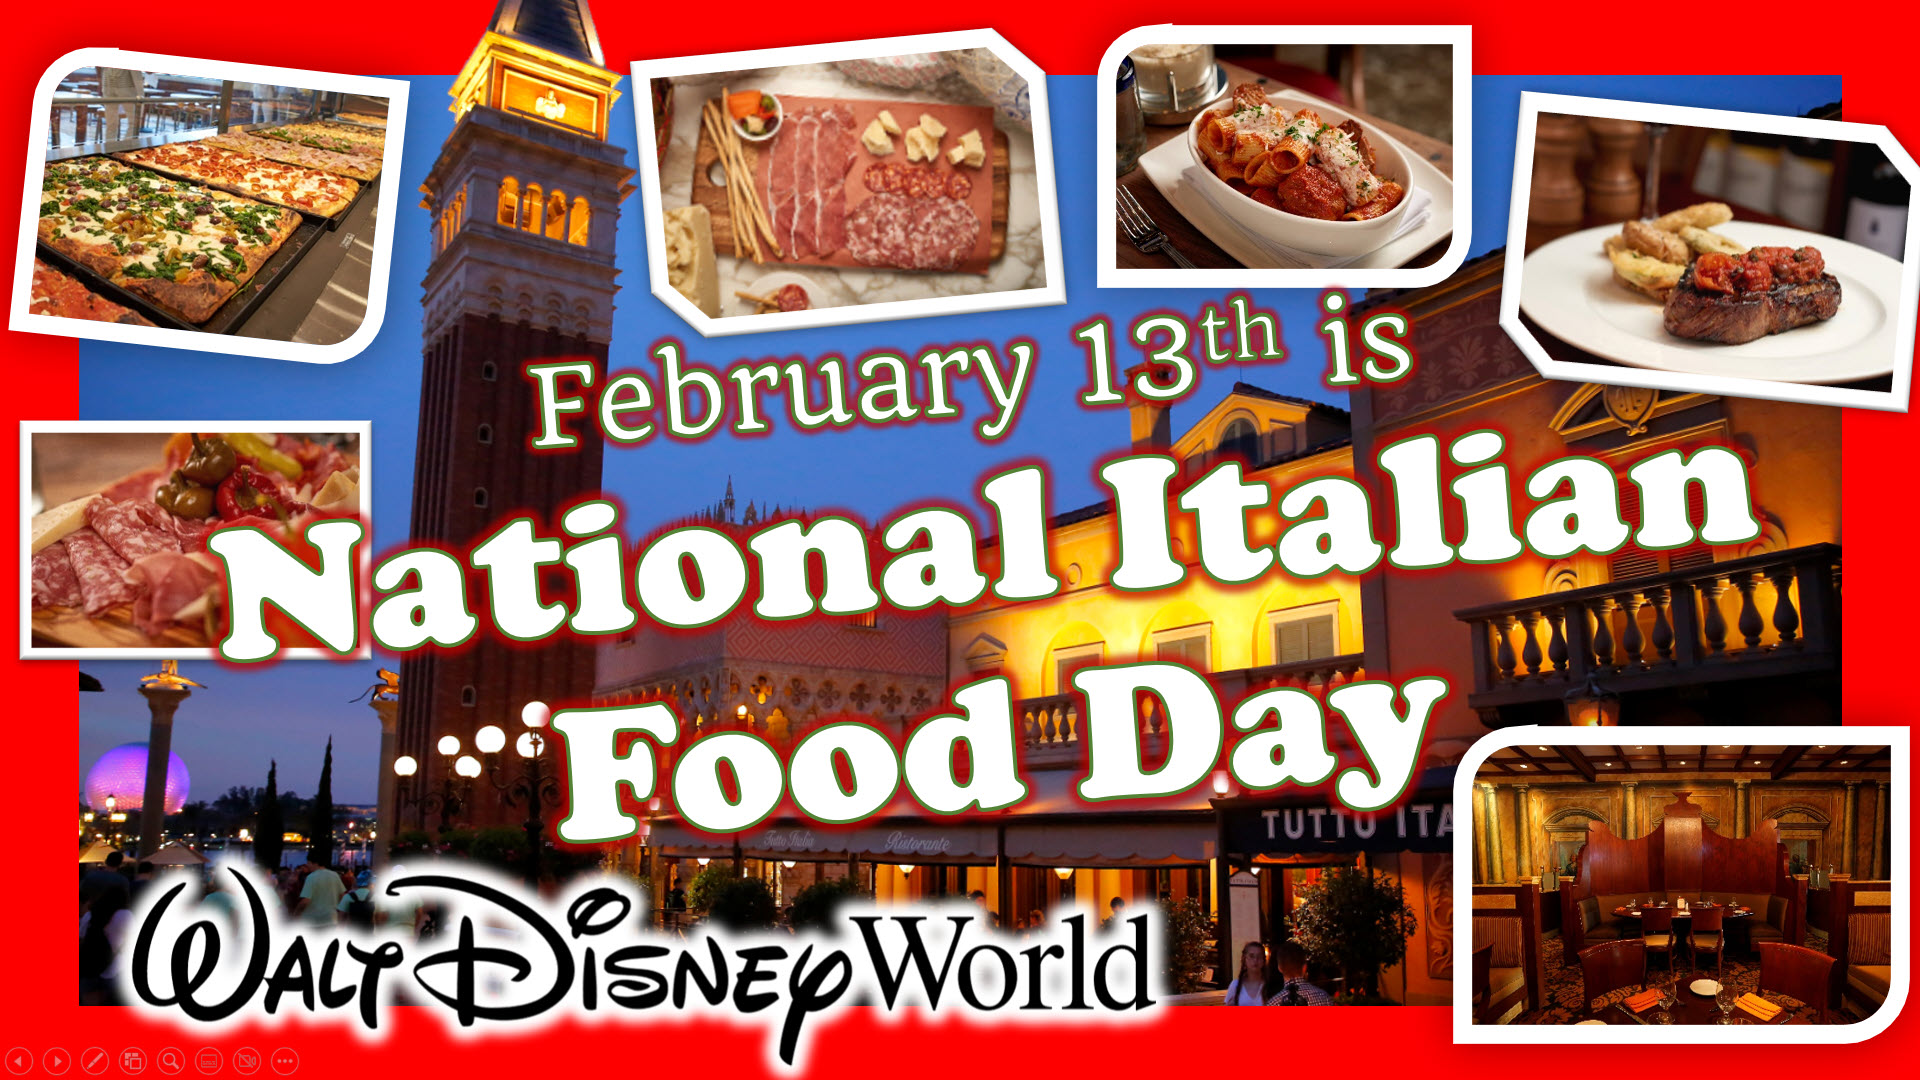 National Italian Food Day at Walt Disney World